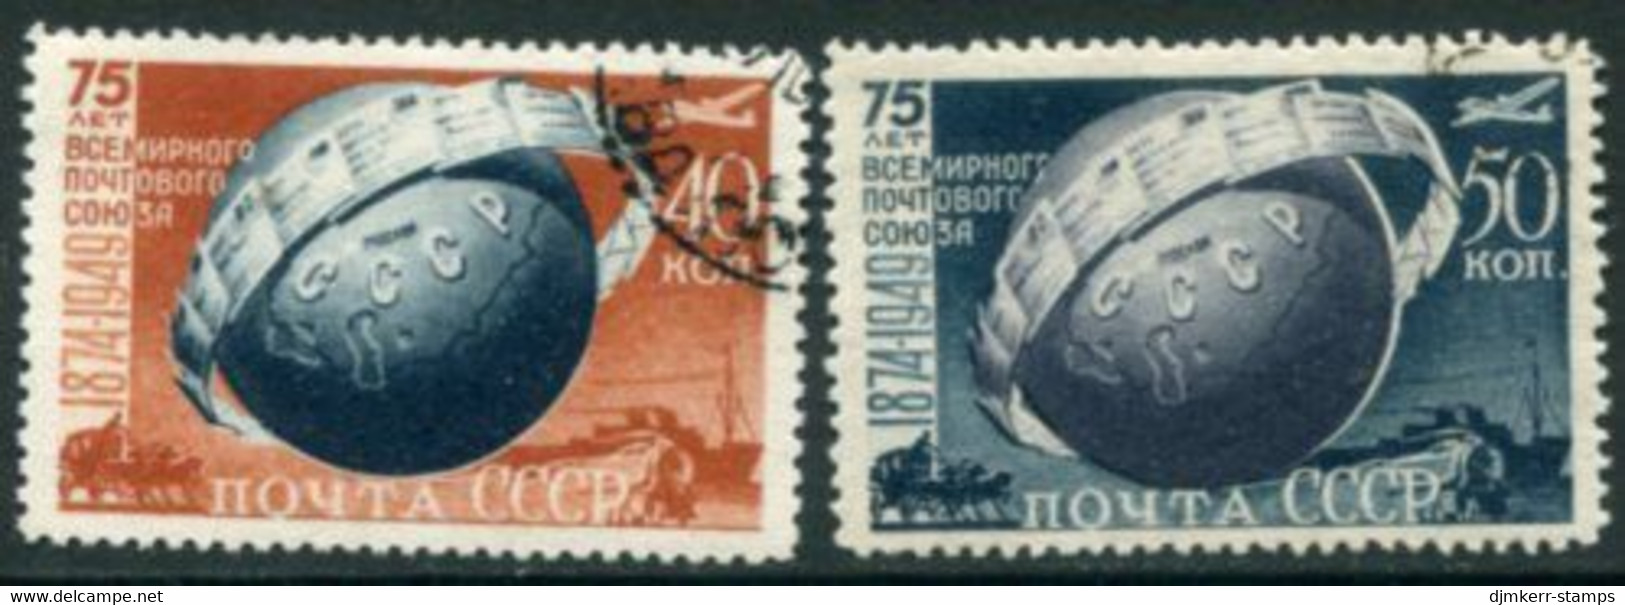 SOVIET UNION 1949 UPU Anniversary Used.  Michel 1383-84A - Used Stamps